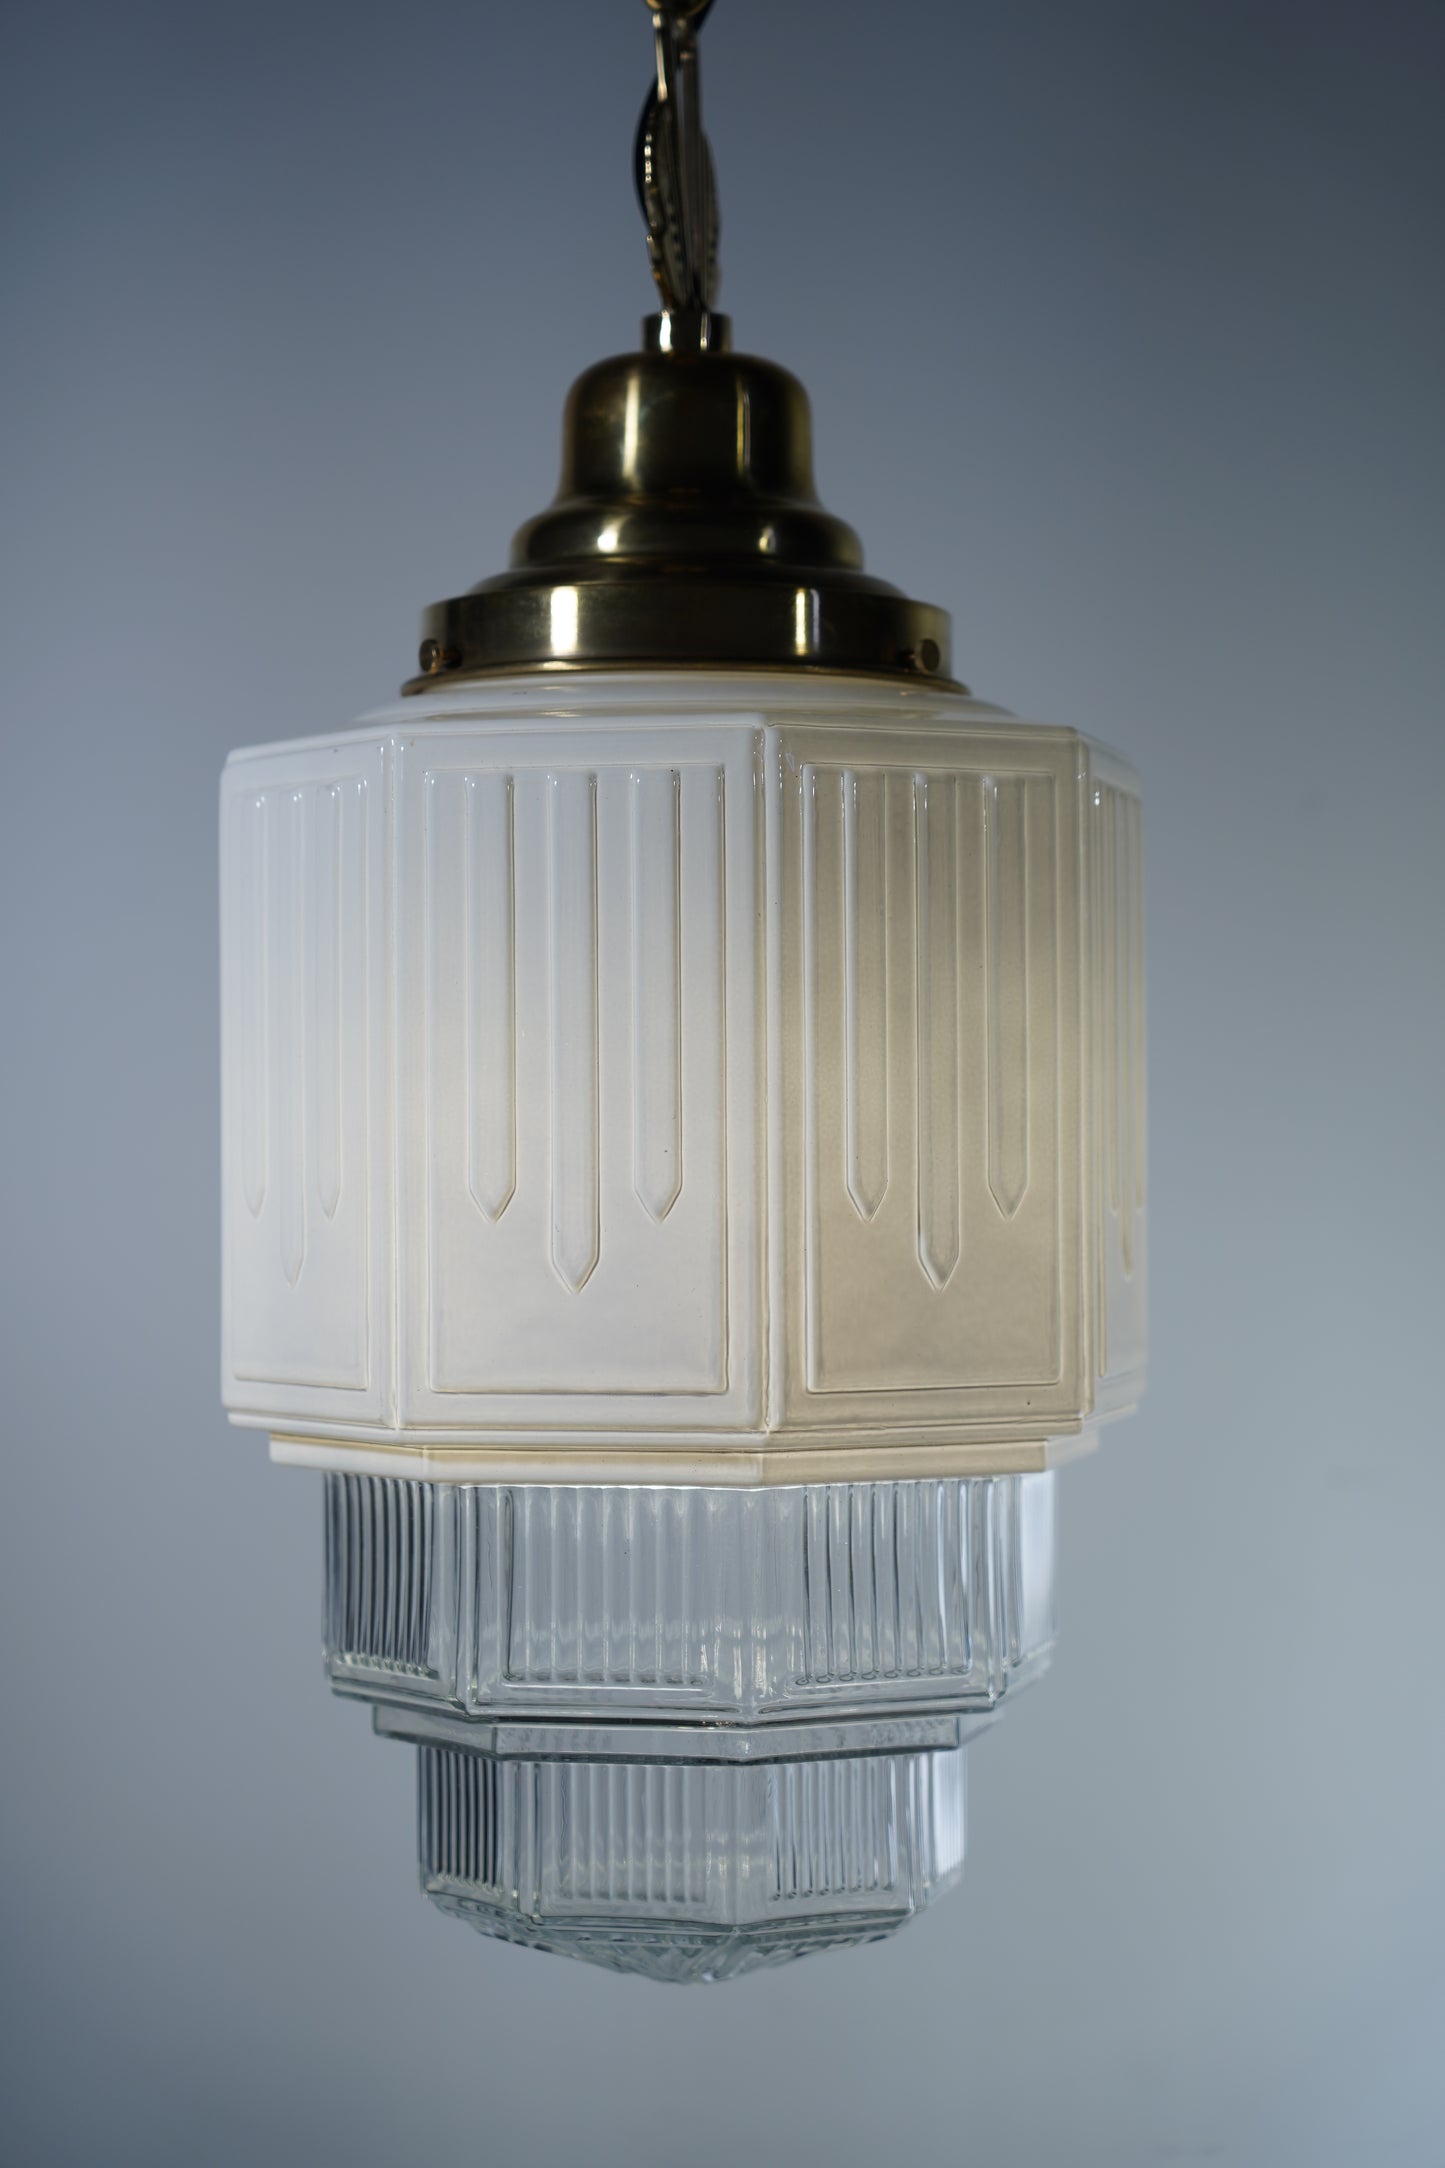 Lumière - Art-Deco Hollywood Pendant Light Fixture